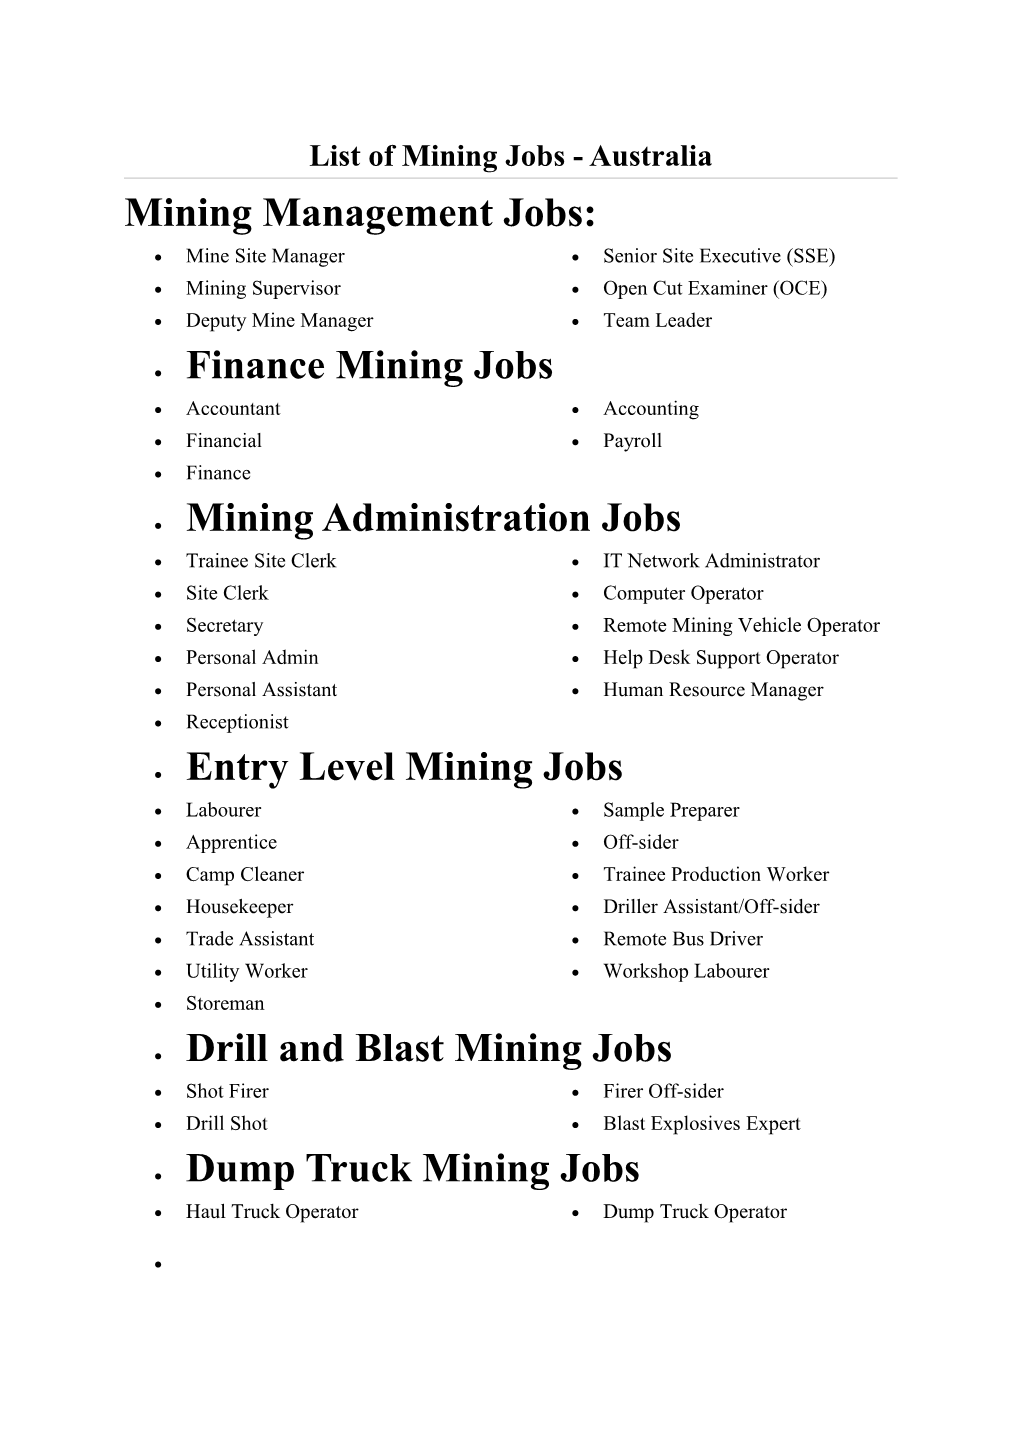 List of Mining Jobs - Australia